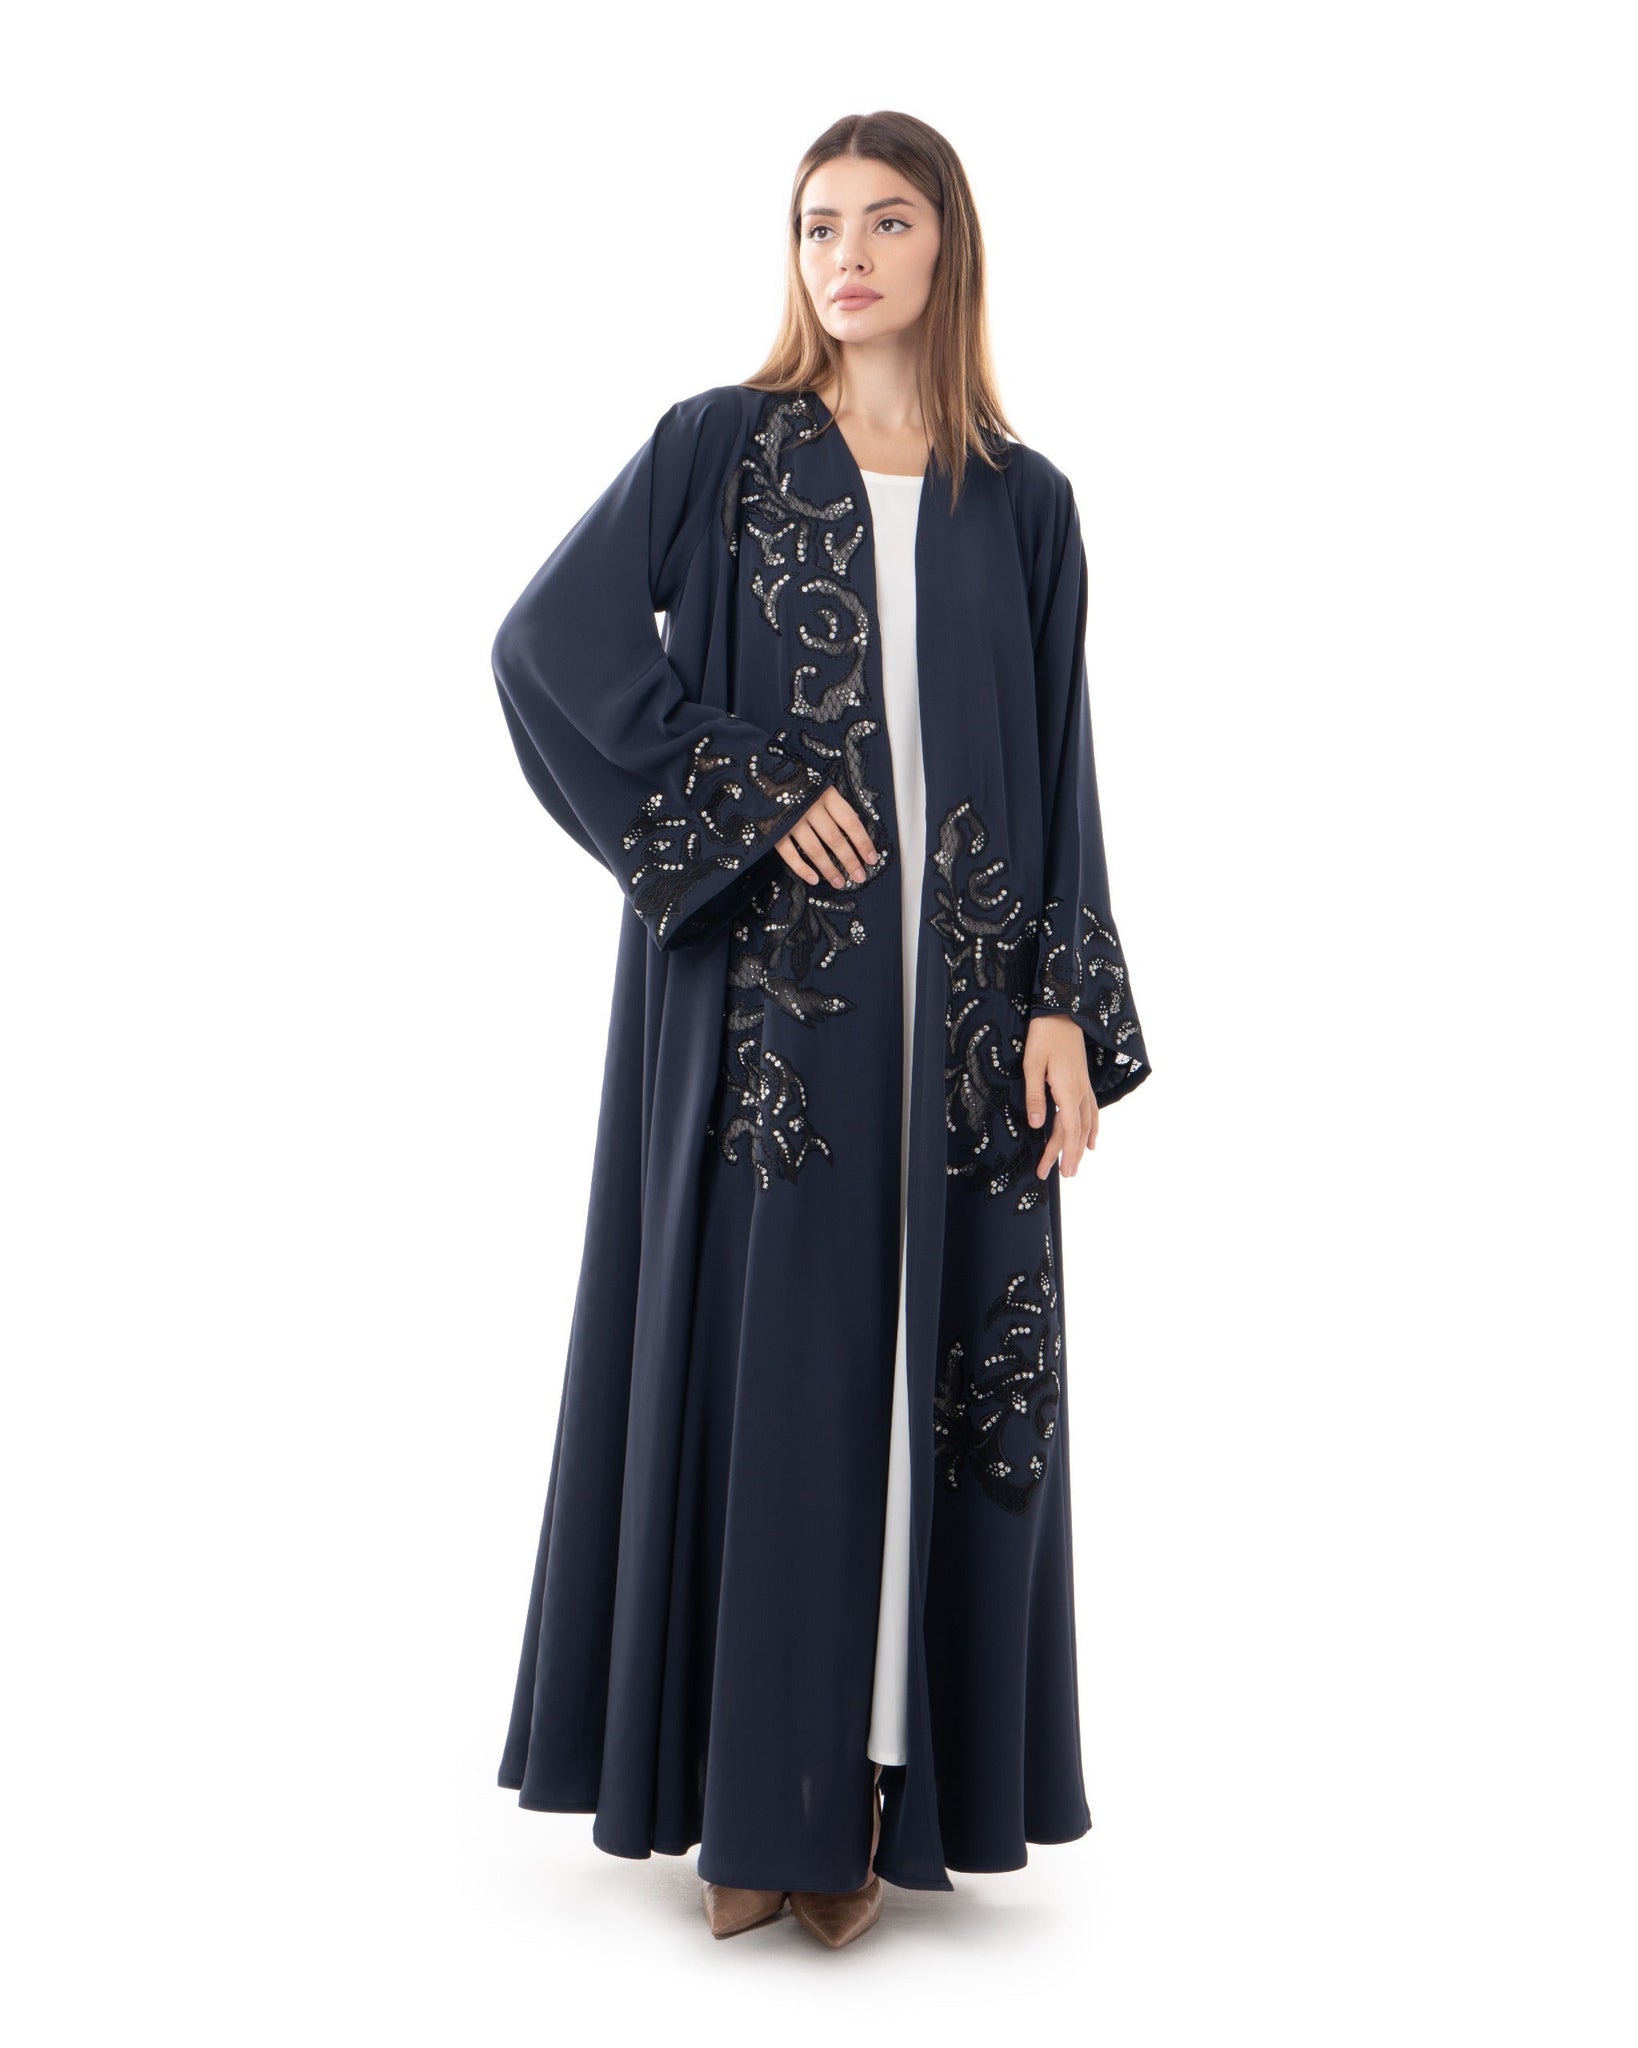 Hanayen Exquisite Navy Blue Abaya With Lace Detailing